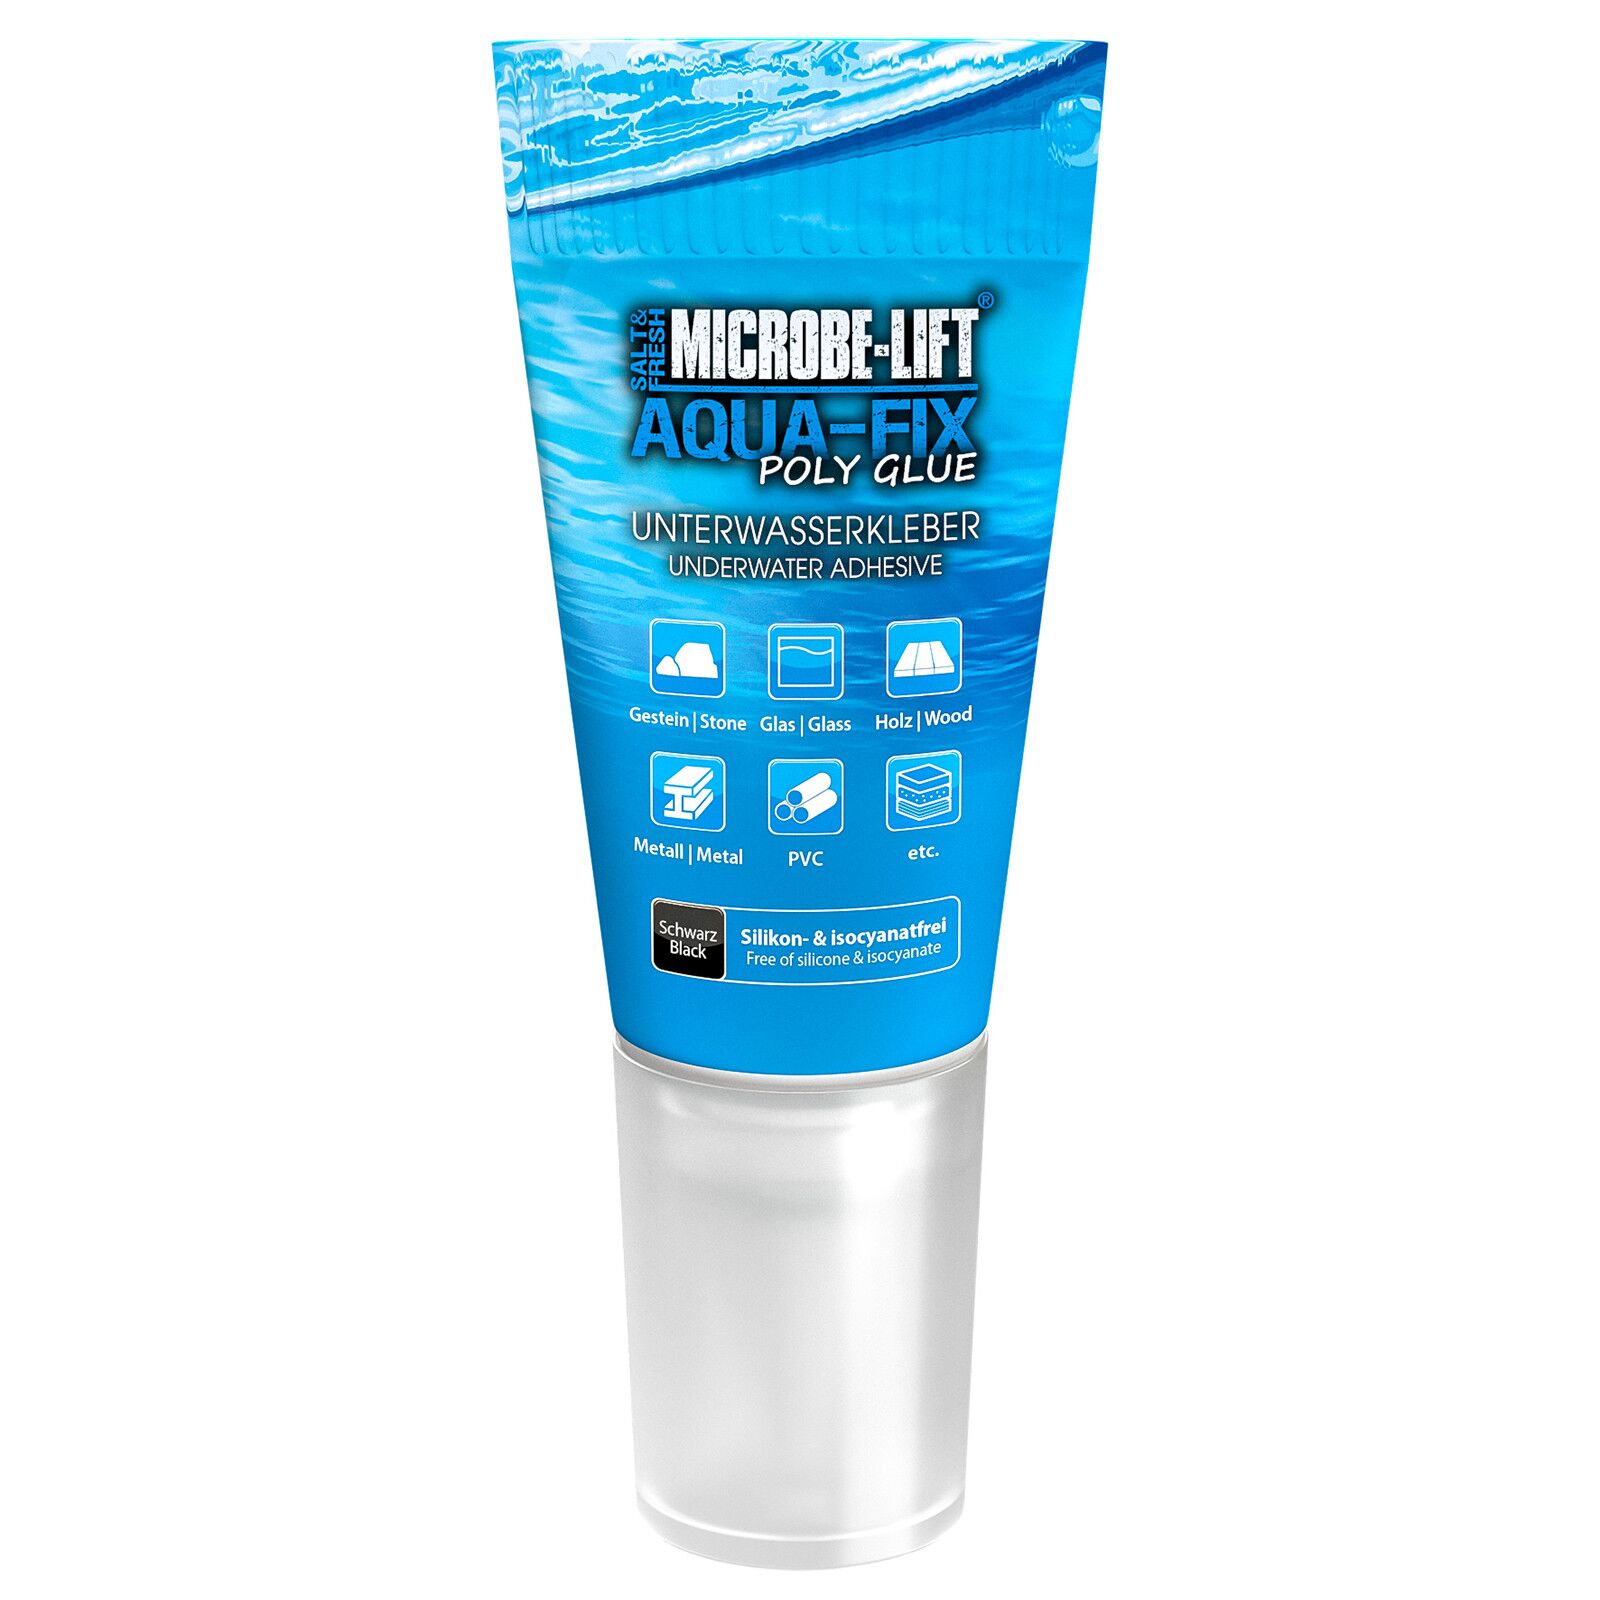 Microbe-Lift - Aqua-Fix Poly Glue - Unterwasserkleber - 60 g Tube - Aquasabi